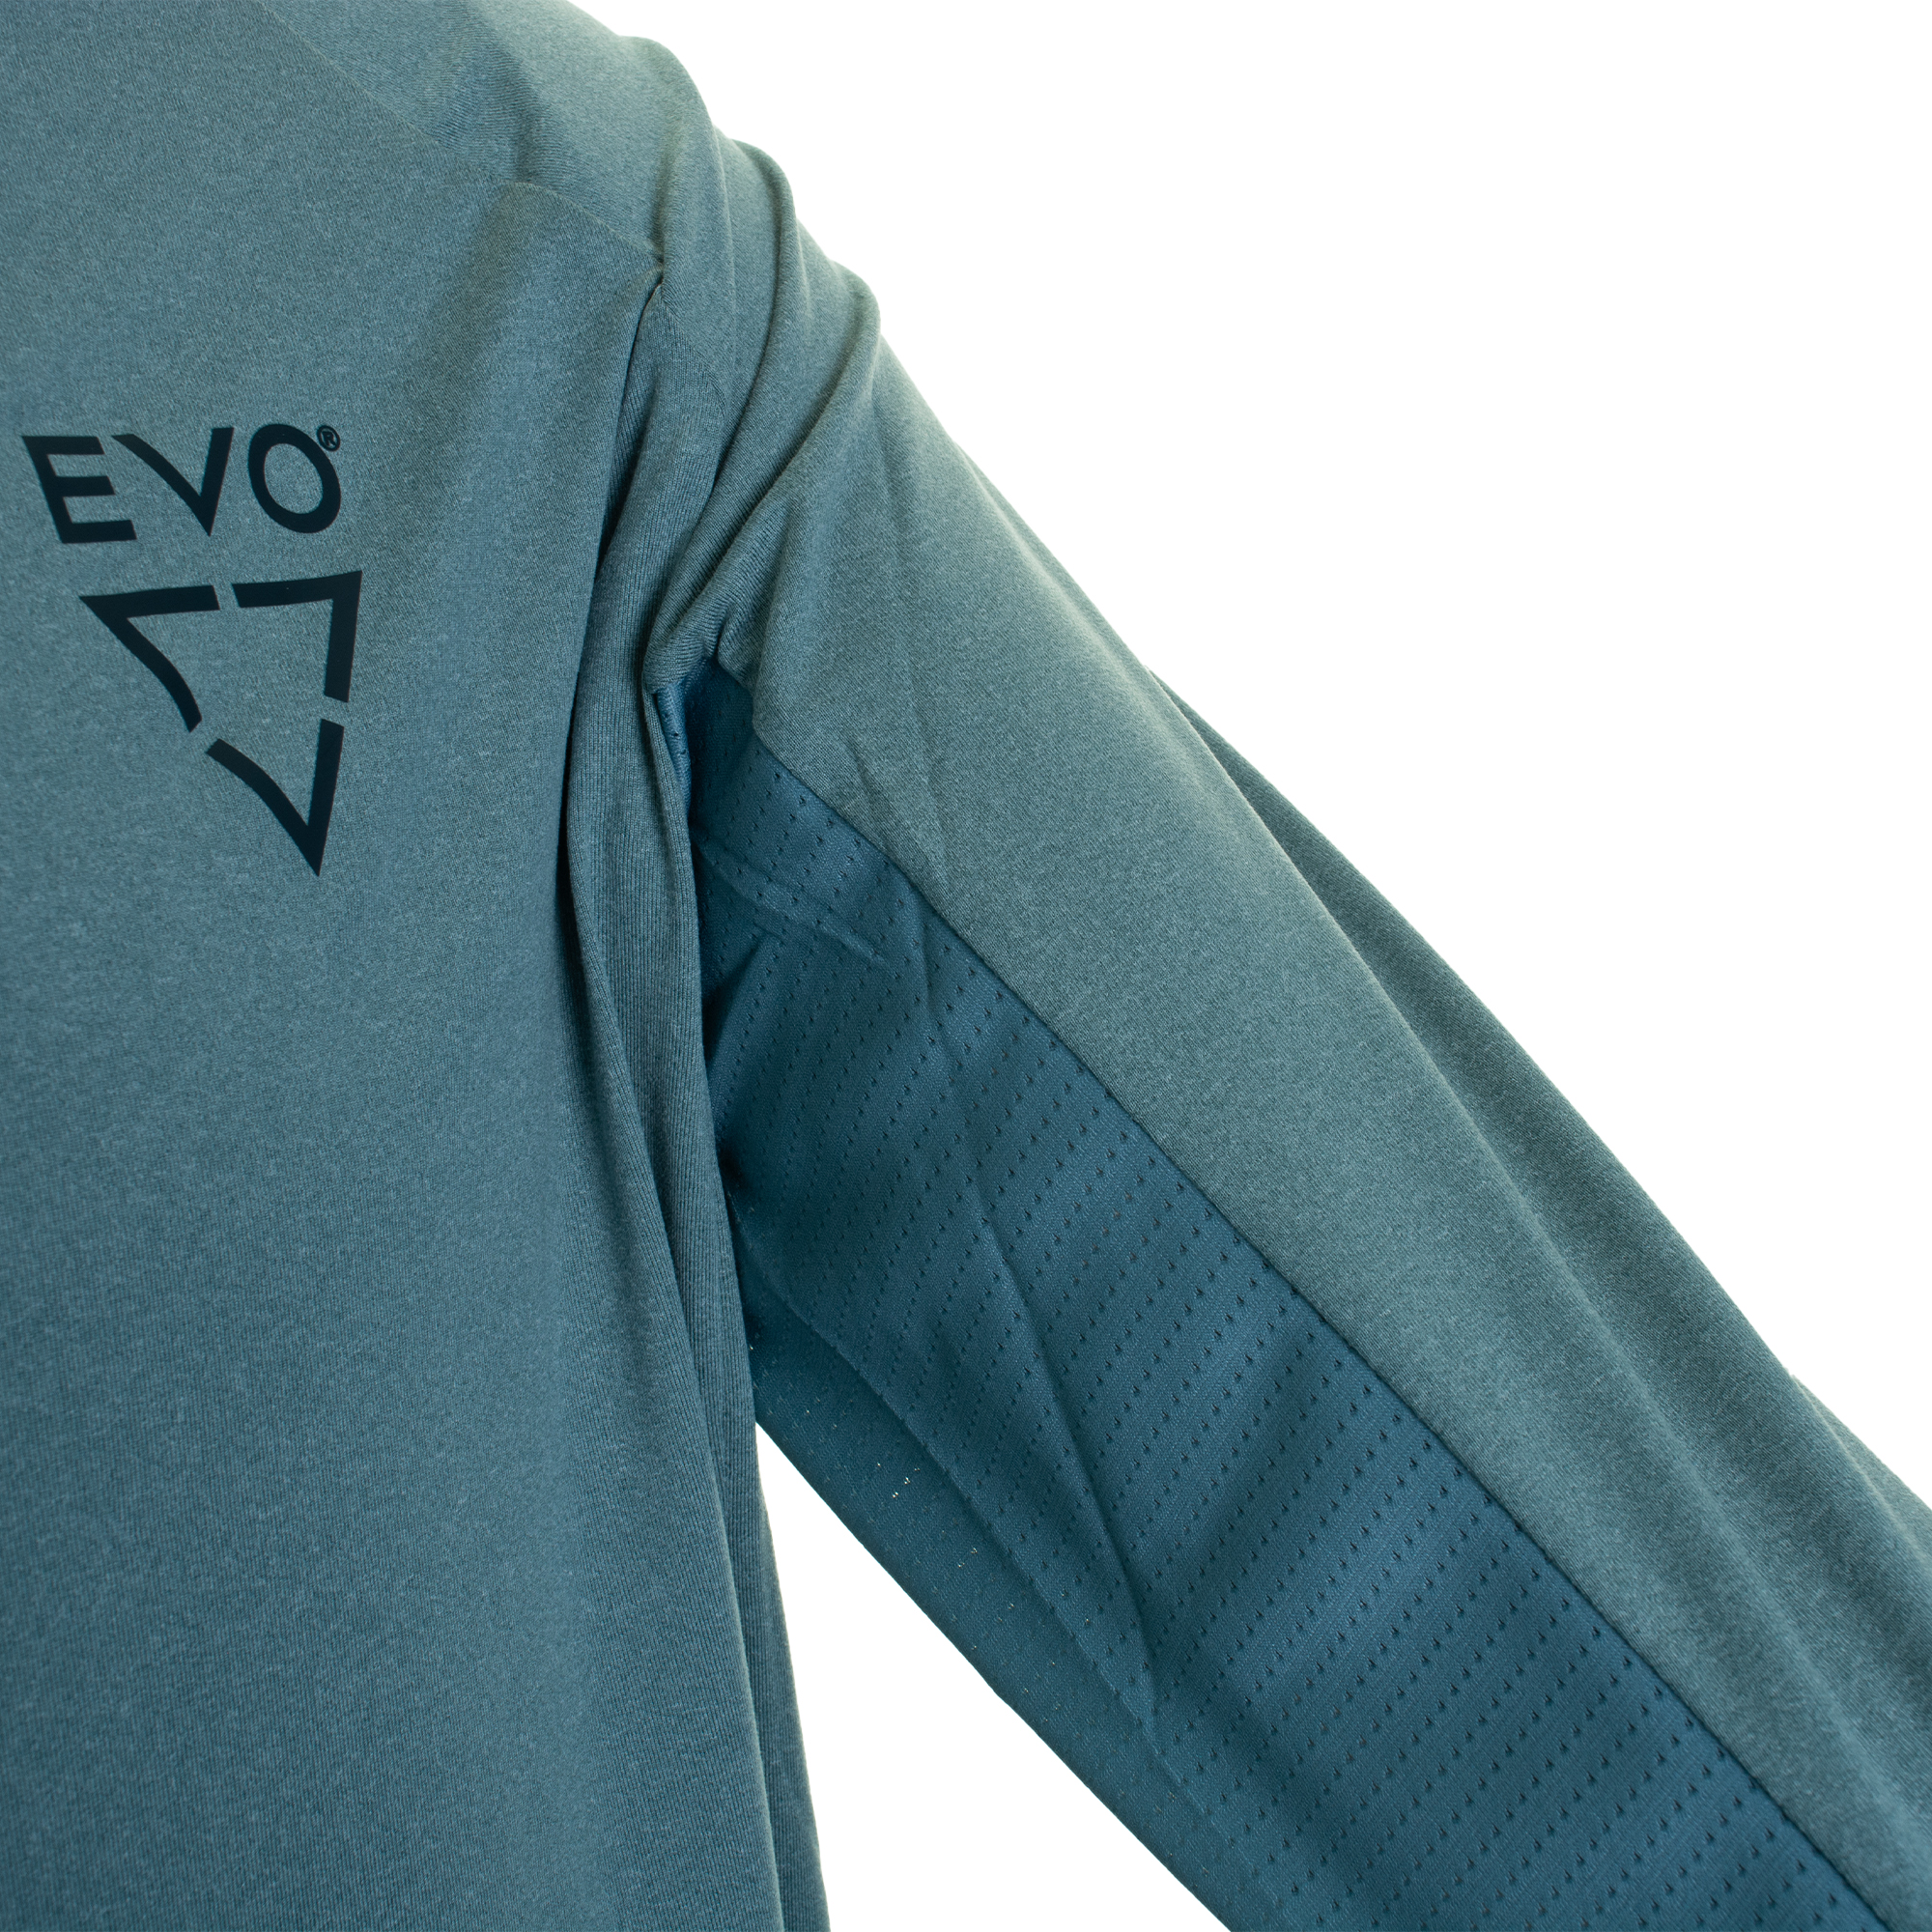 EVO Buoy Long Sleeve Hooded Performance Top (Men’s)